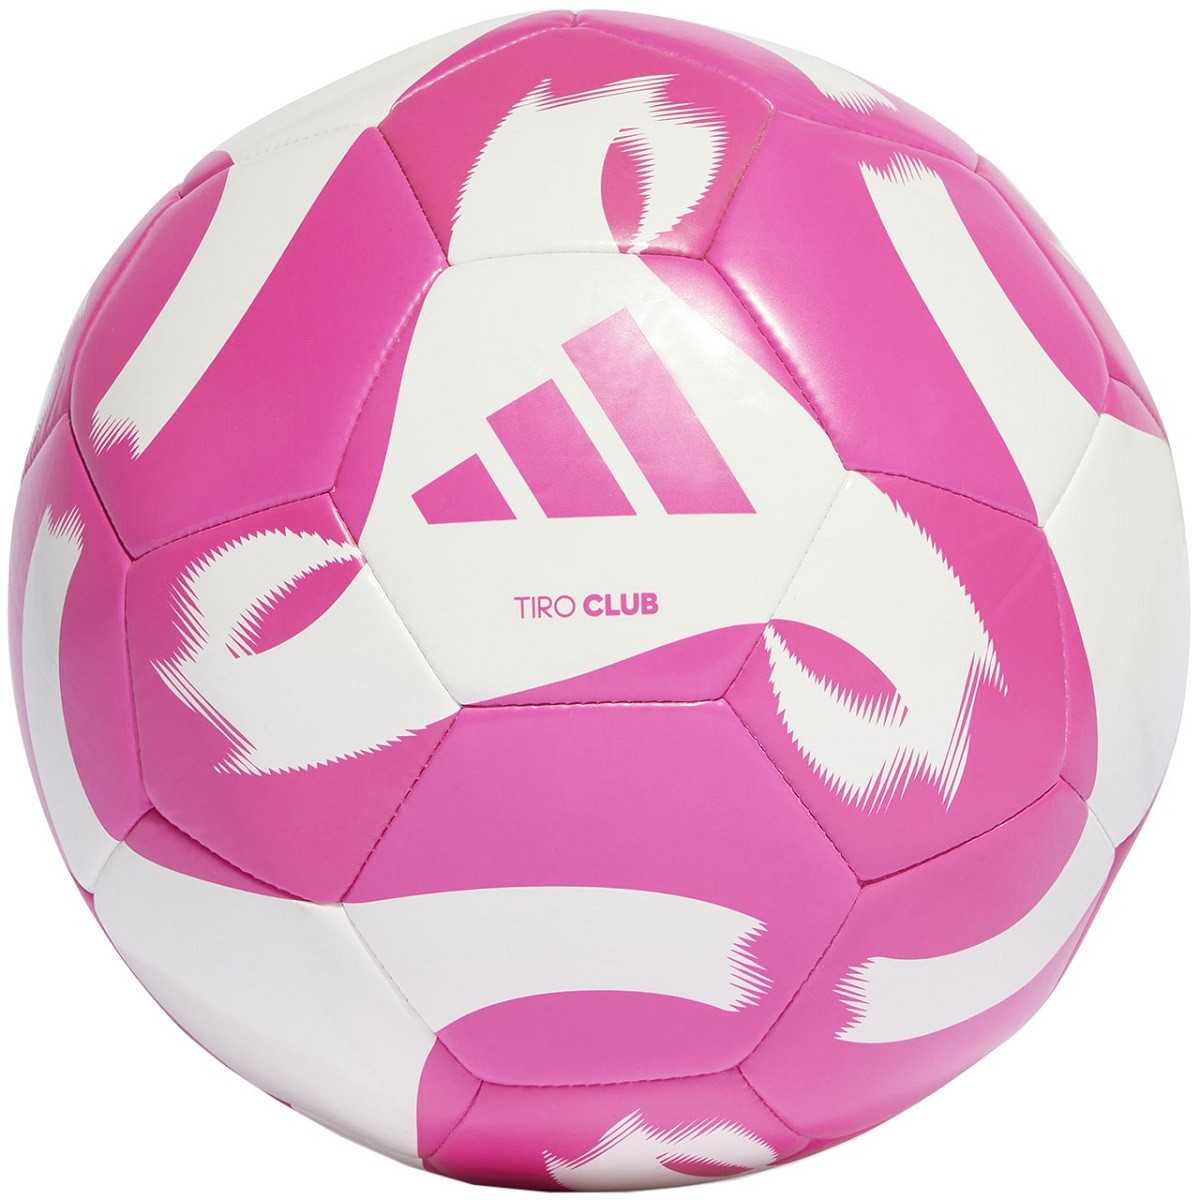 Adidas Tiro Club futbolo kamuolys, 5 